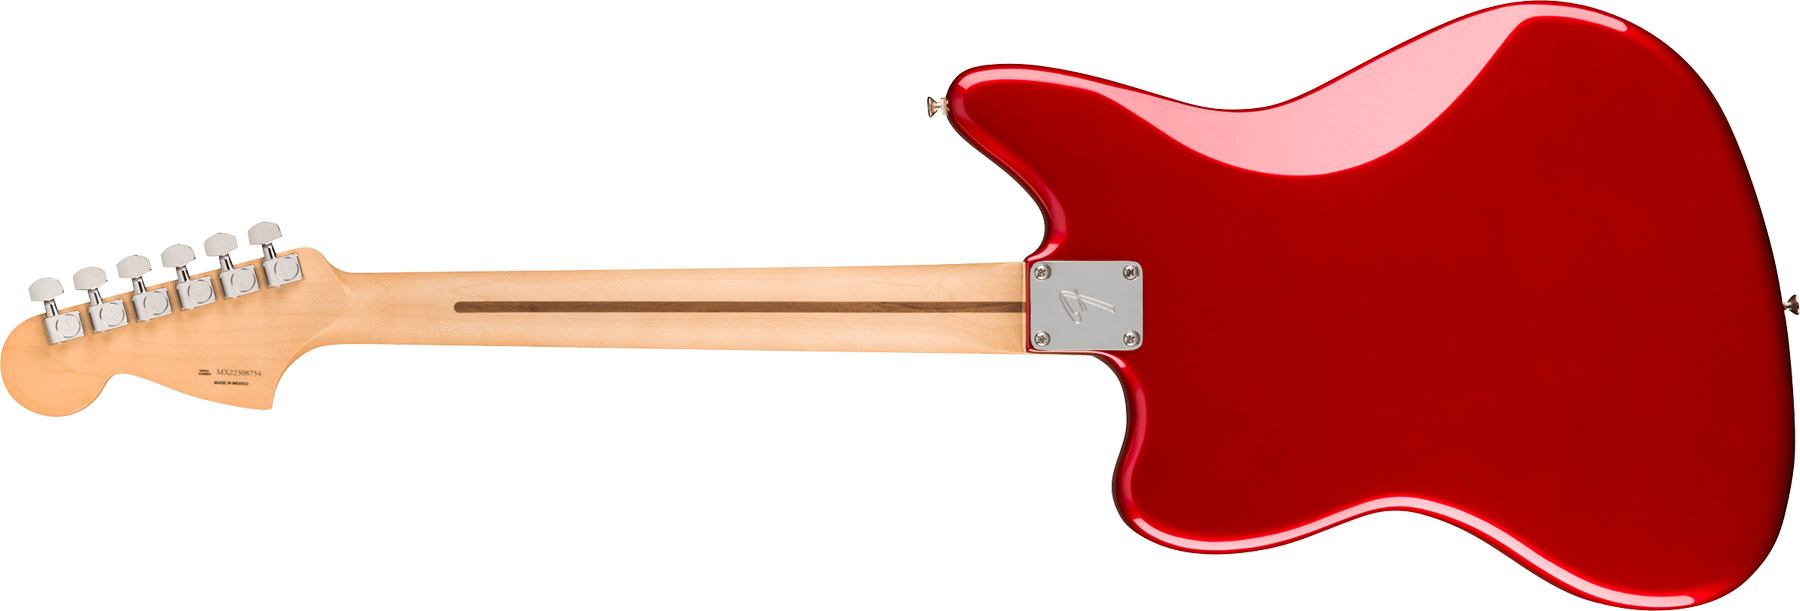 Fender Jaguar Player Mex 2023 Hs Trem Pf - Candy Apple Red - Retro rock electric guitar - Variation 1